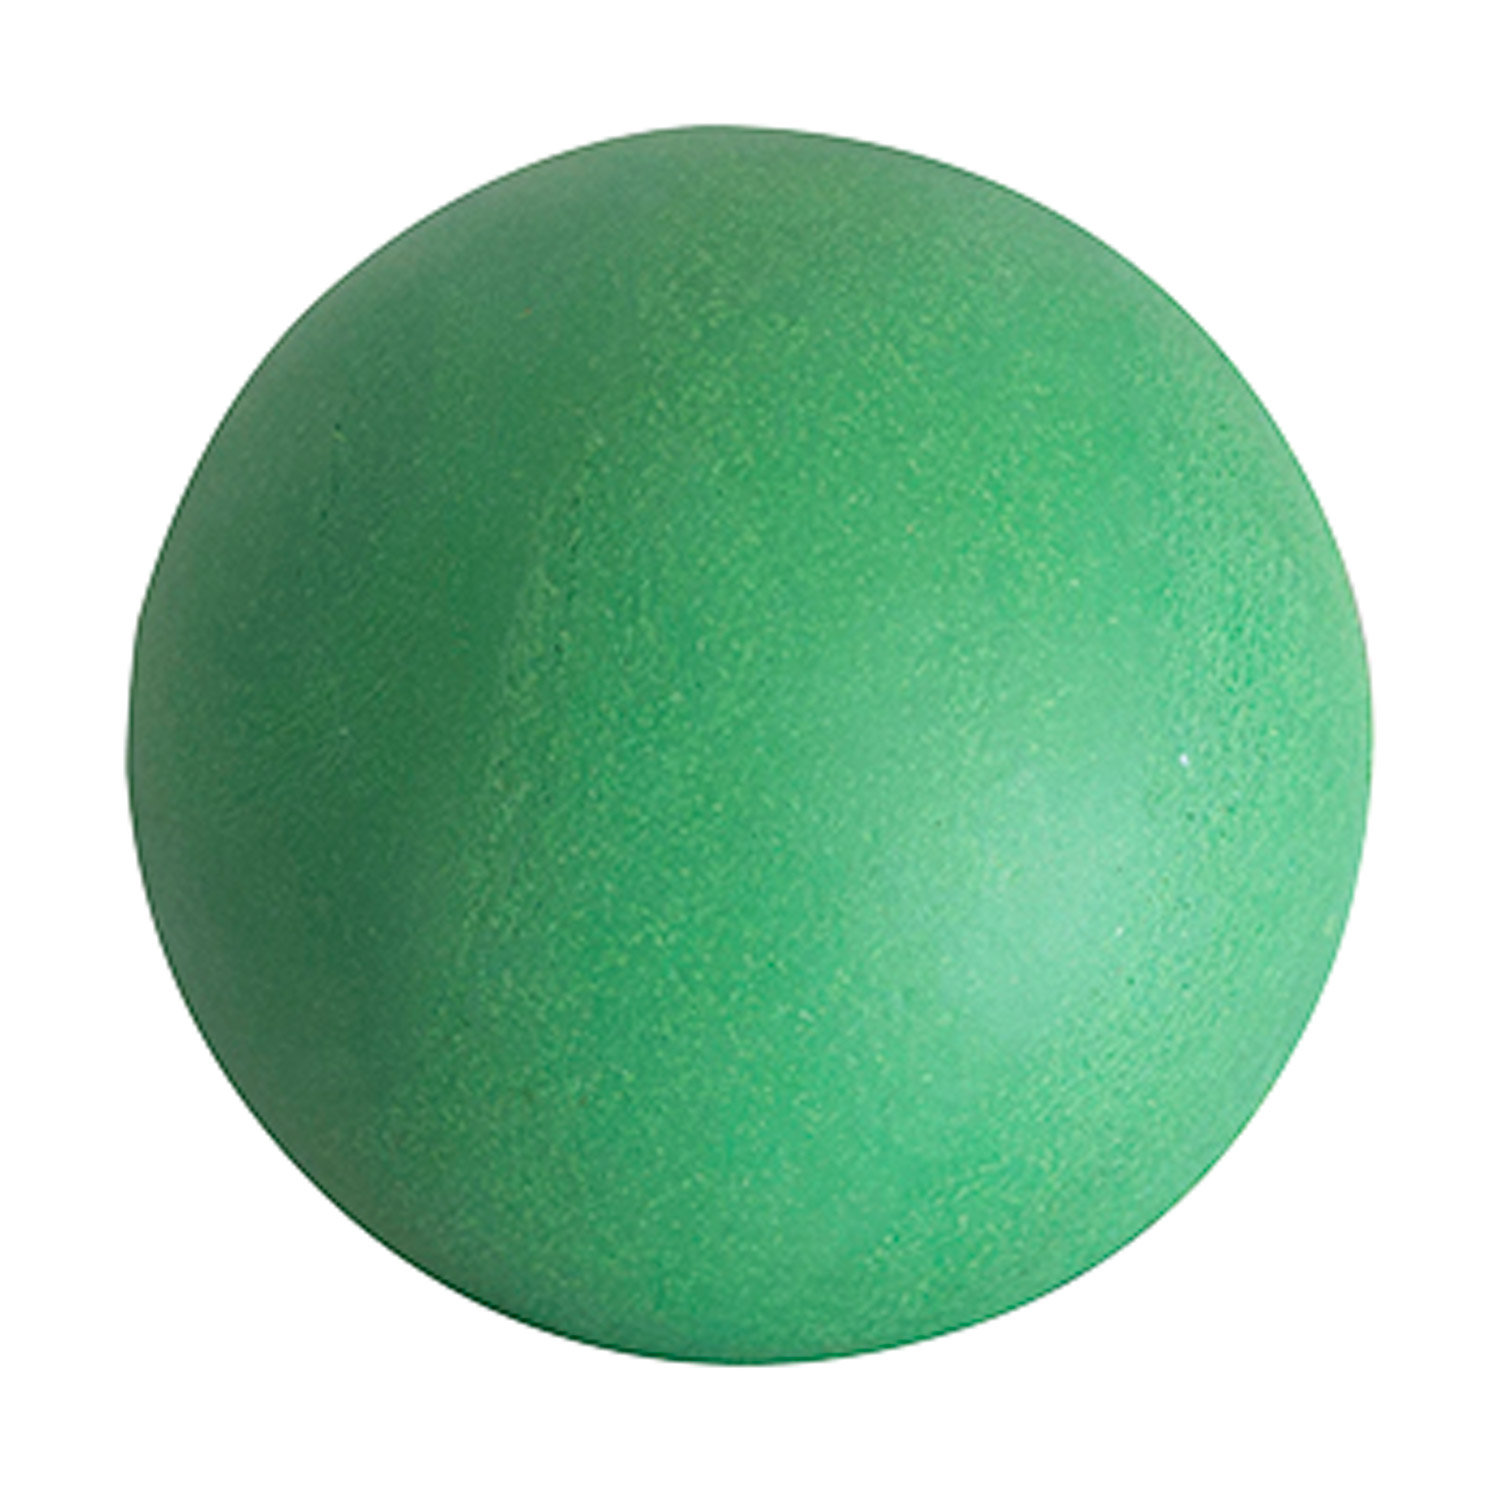 Moosgummiball grün